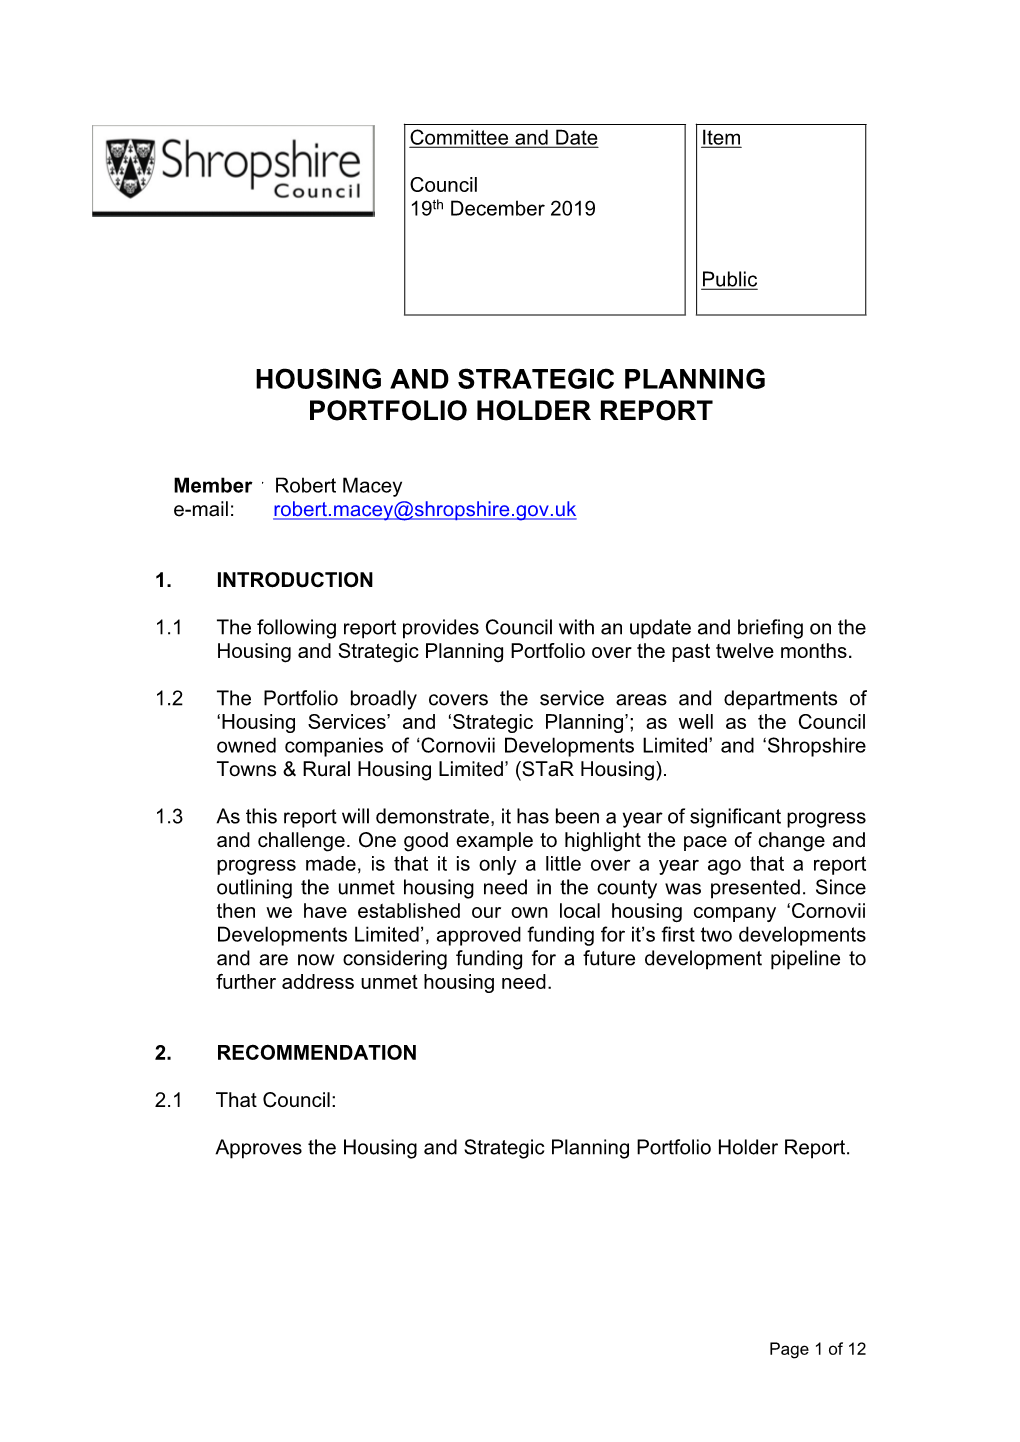 Housing and Strategic Planning Portfolio Holder Report